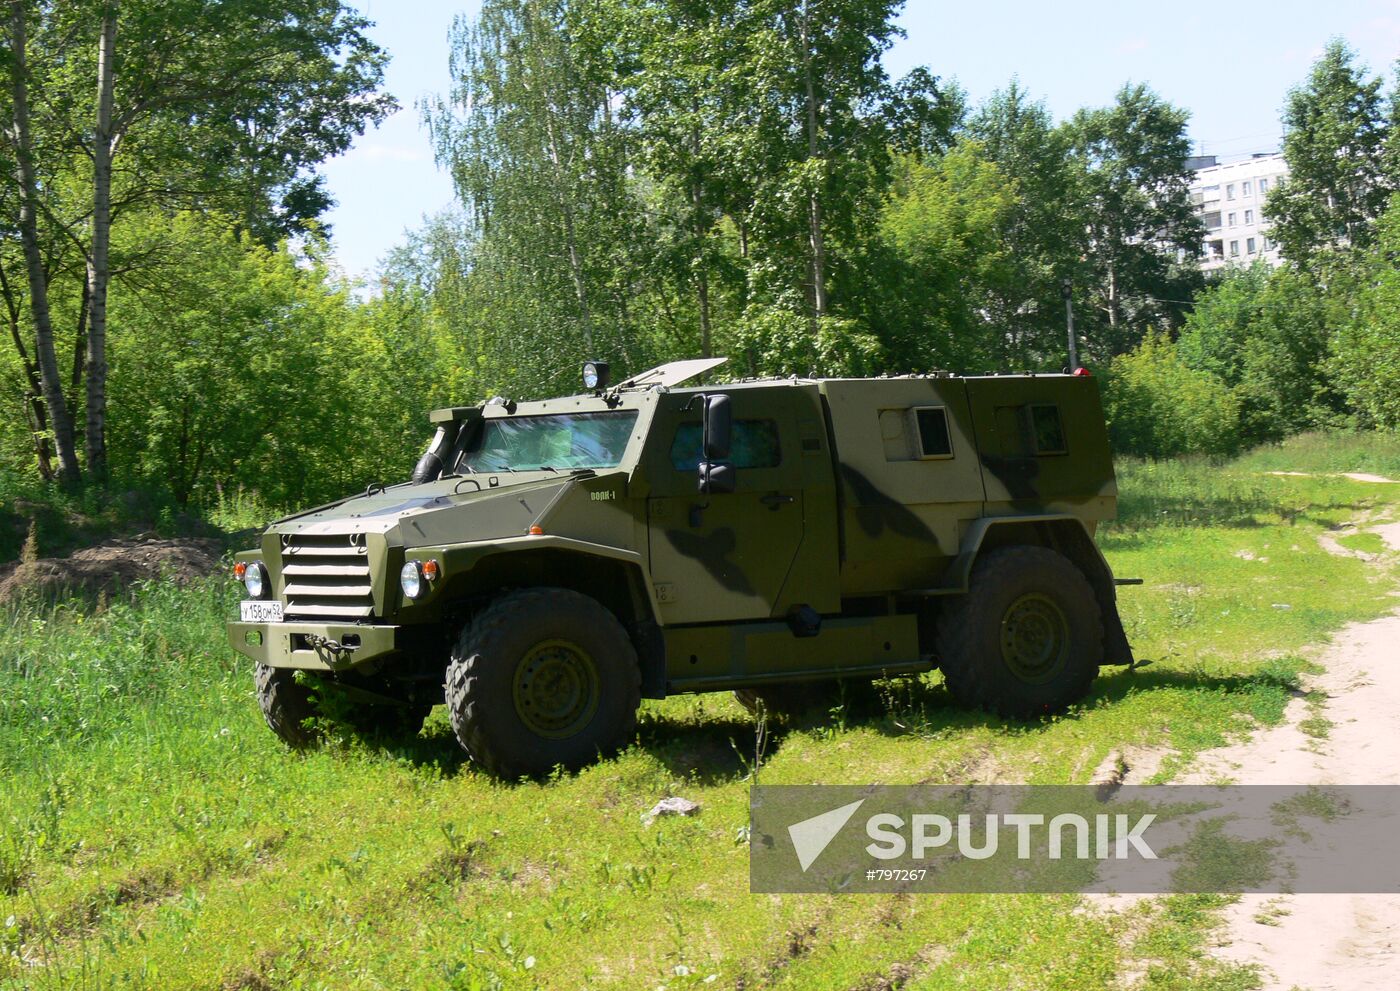 Volk I (Wolf I) VPK-3927 modular protected vehicle